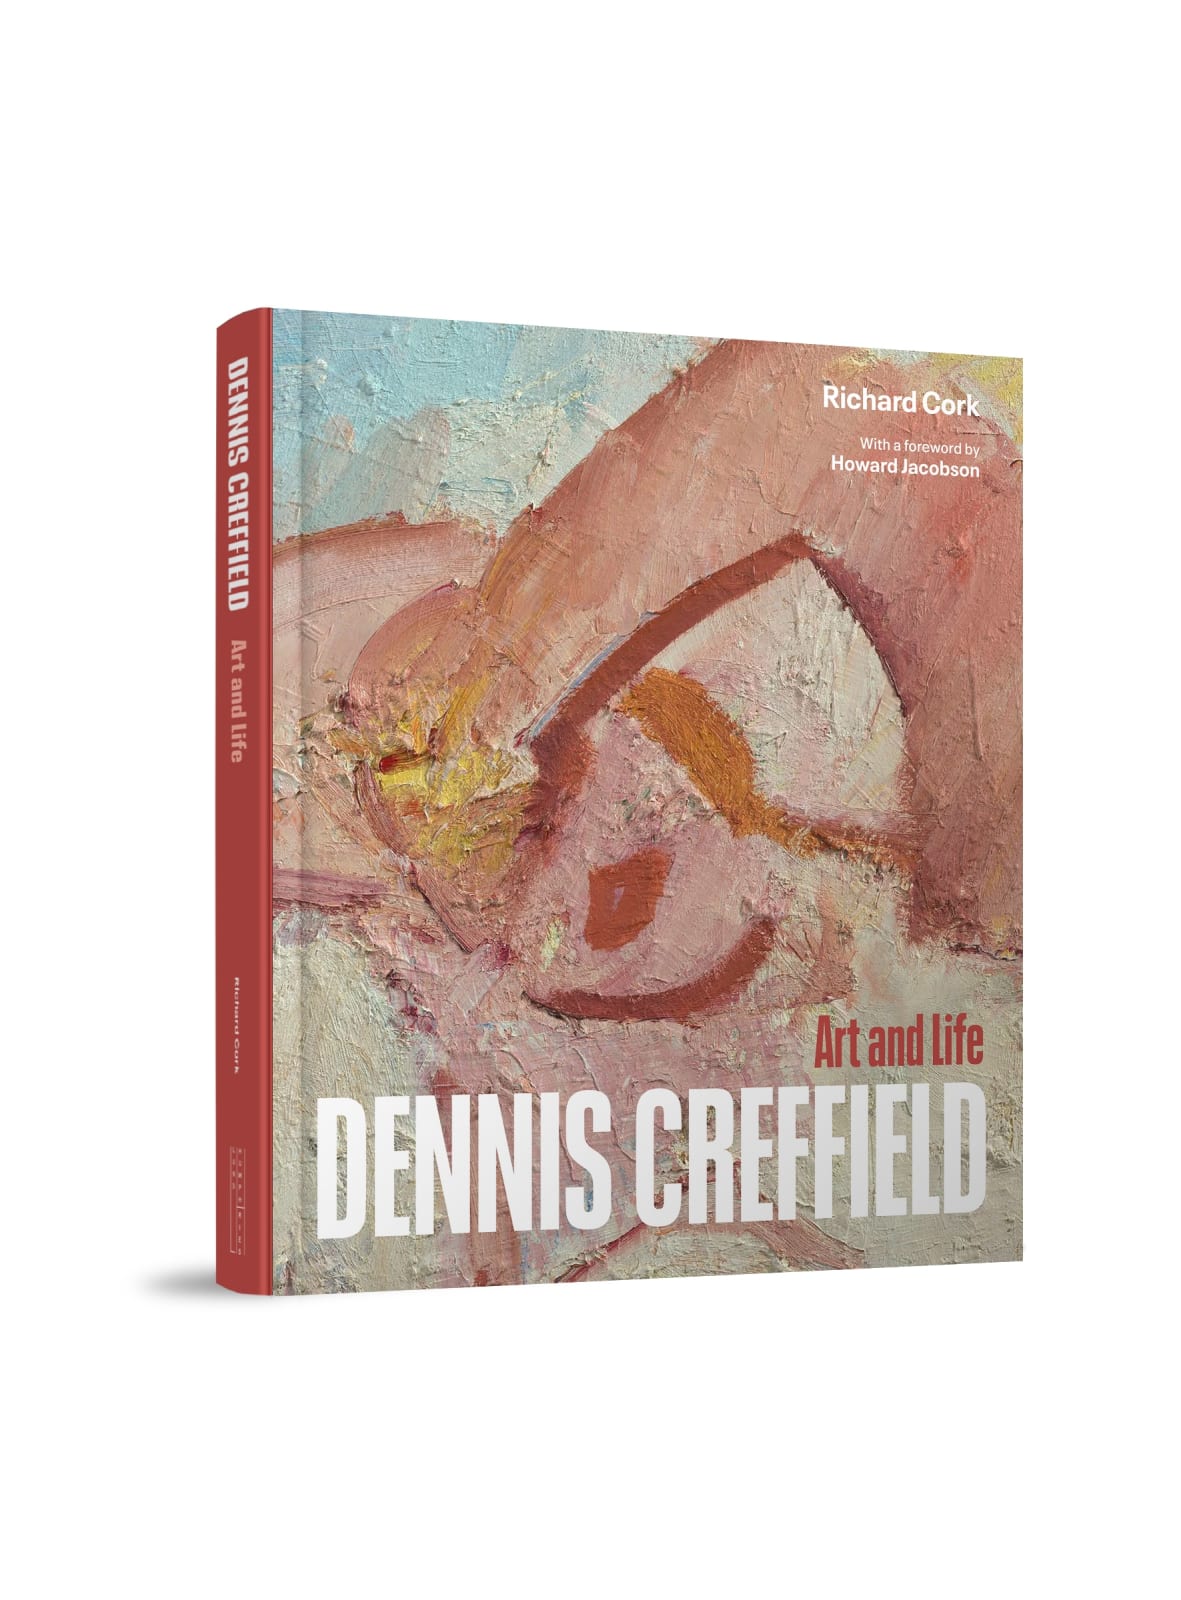 Dennis Creffield, Art and Life by Richard Cork, 2022